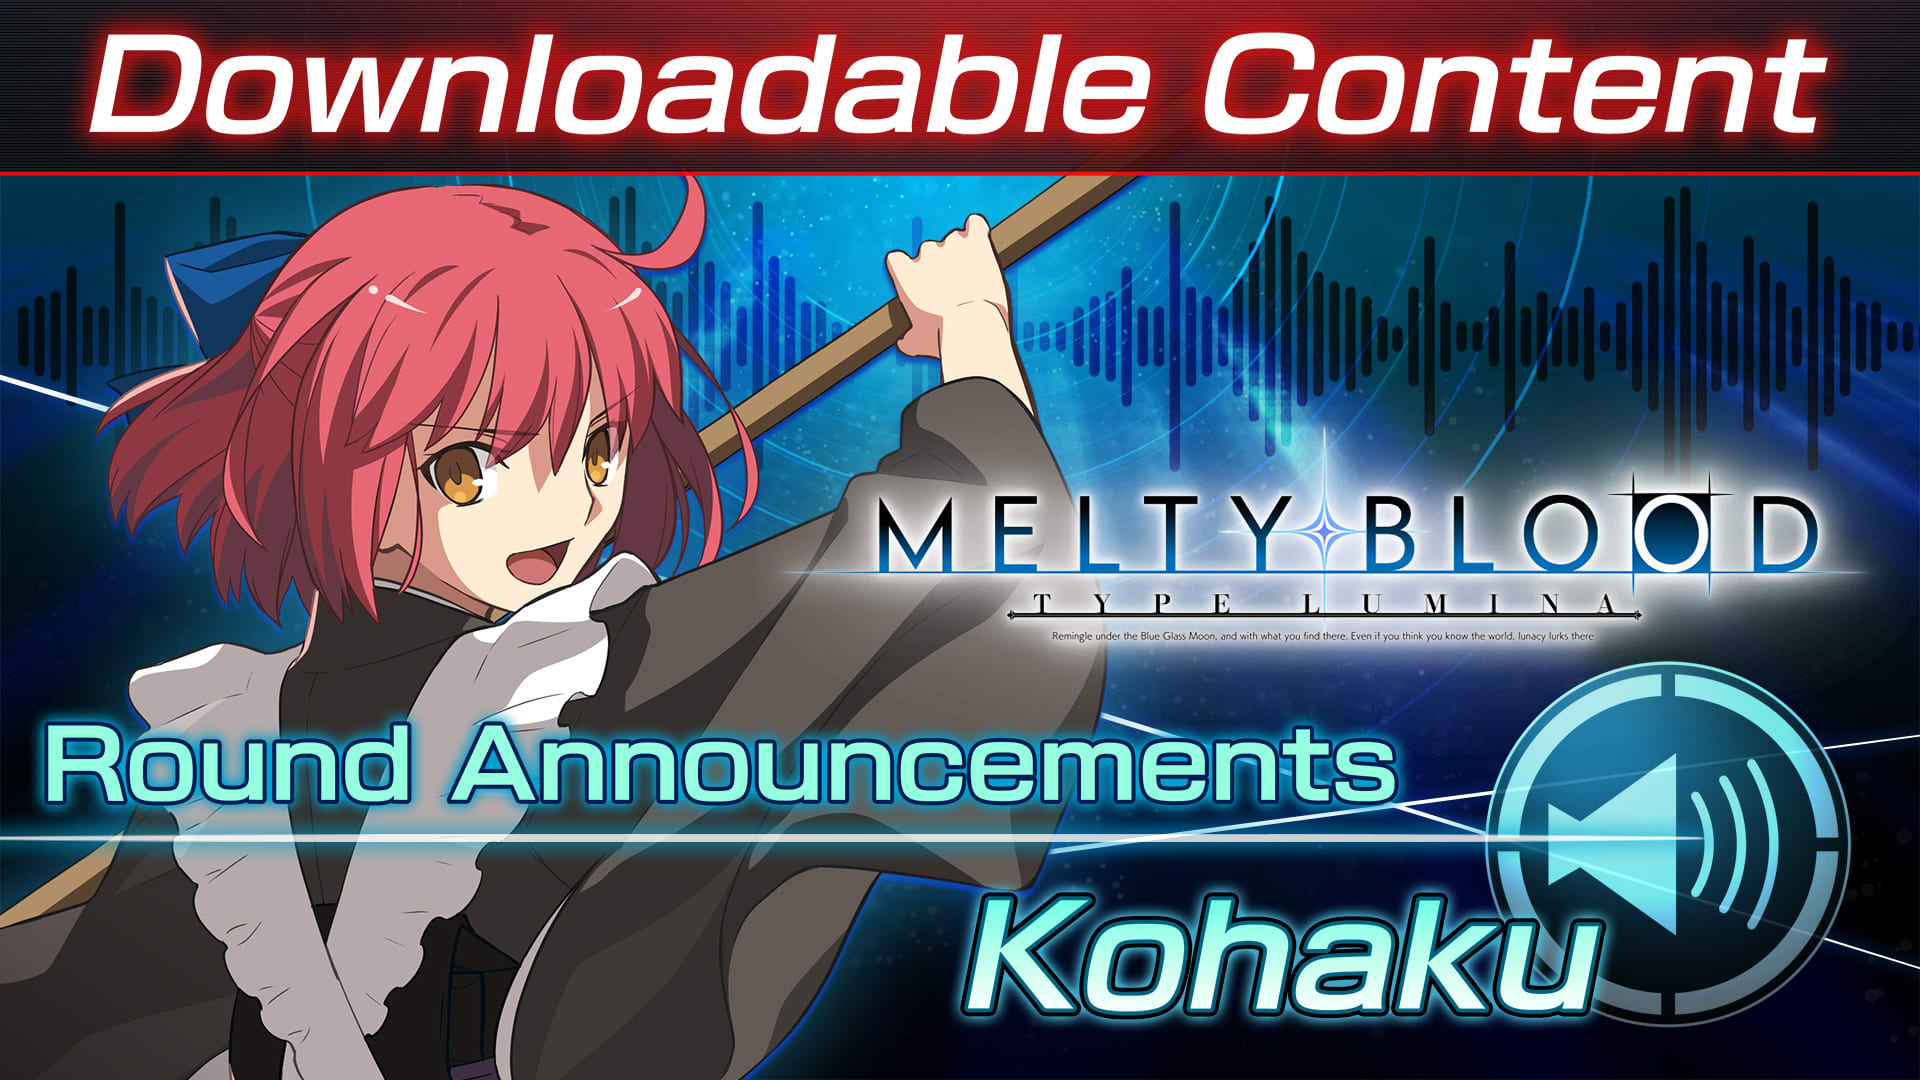 DLC: Kohaku Round Announcements